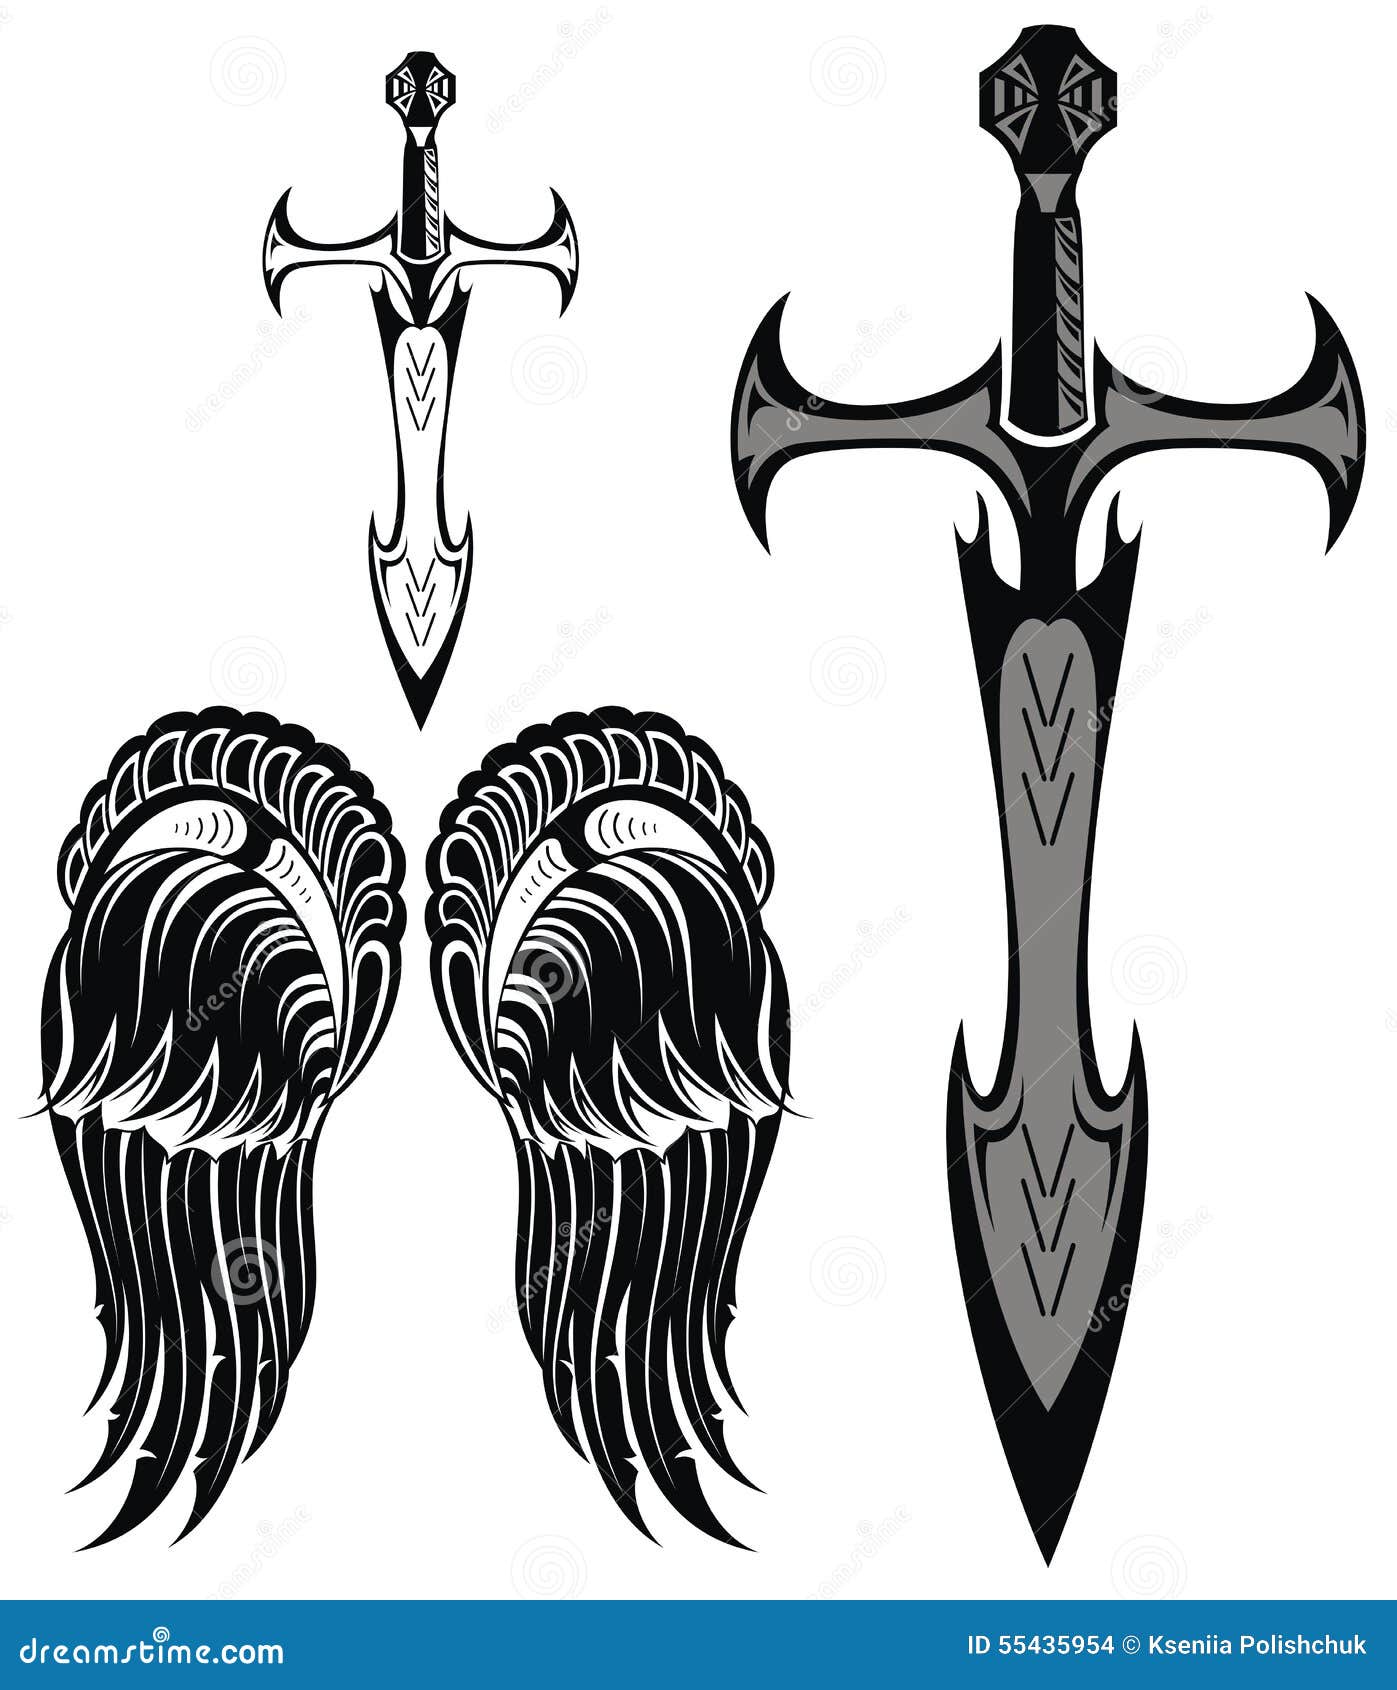 Premium Vector  Tattoo art skull and sword black cross